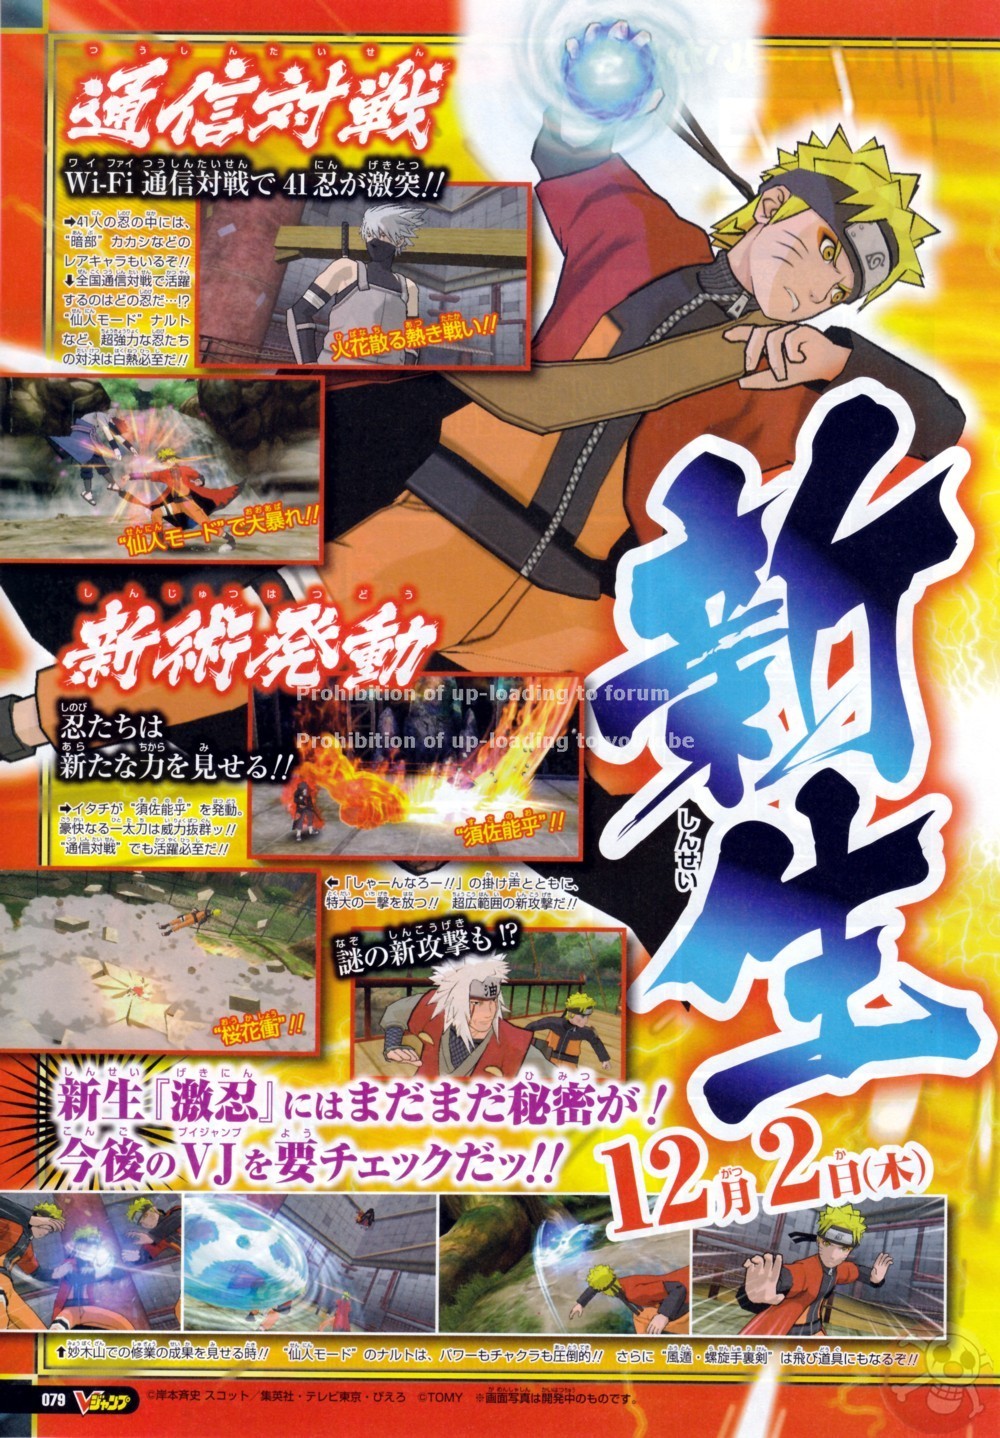 Naruto gekitou ninja taisen 4 wii iso download torrent